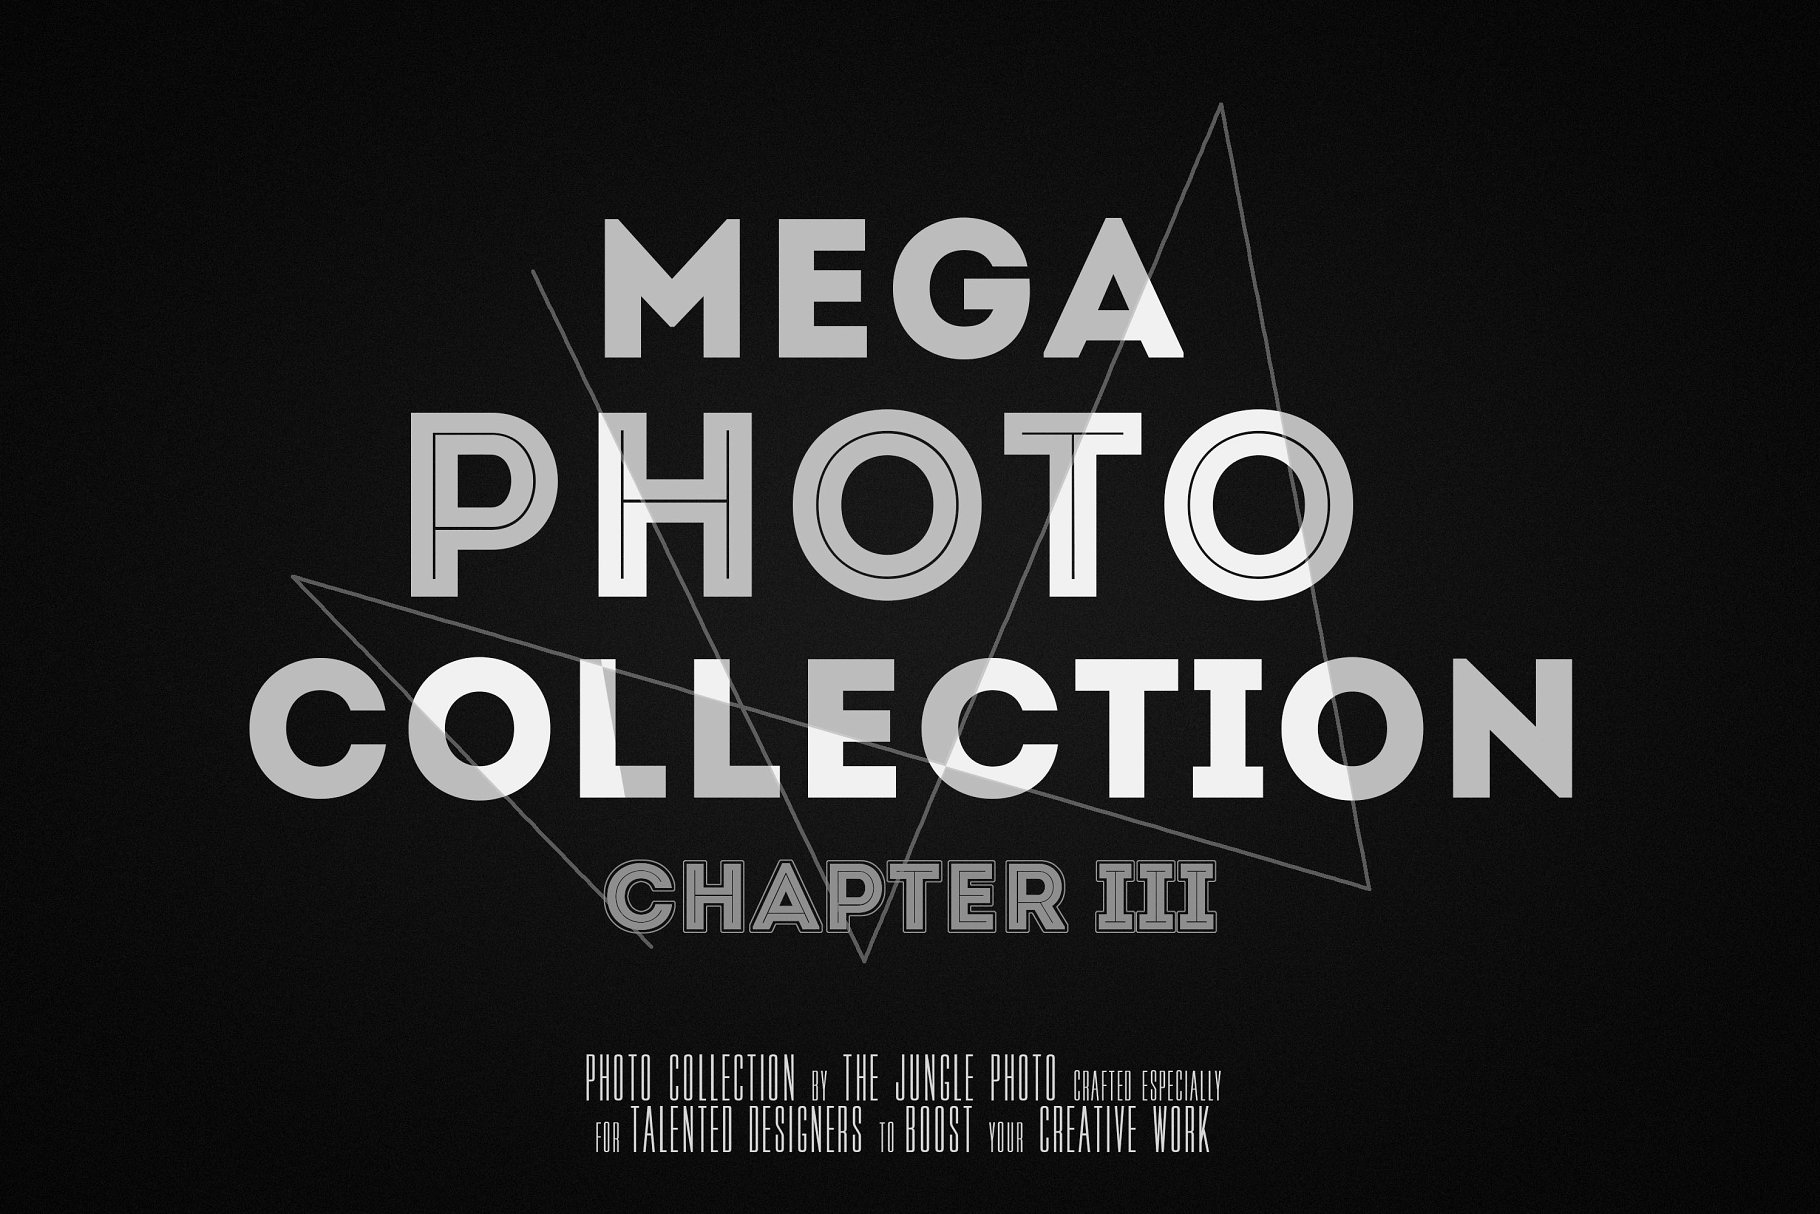 200张摄影师精选高清照片 200 Photos Mega Collection CHAPTER 3插图